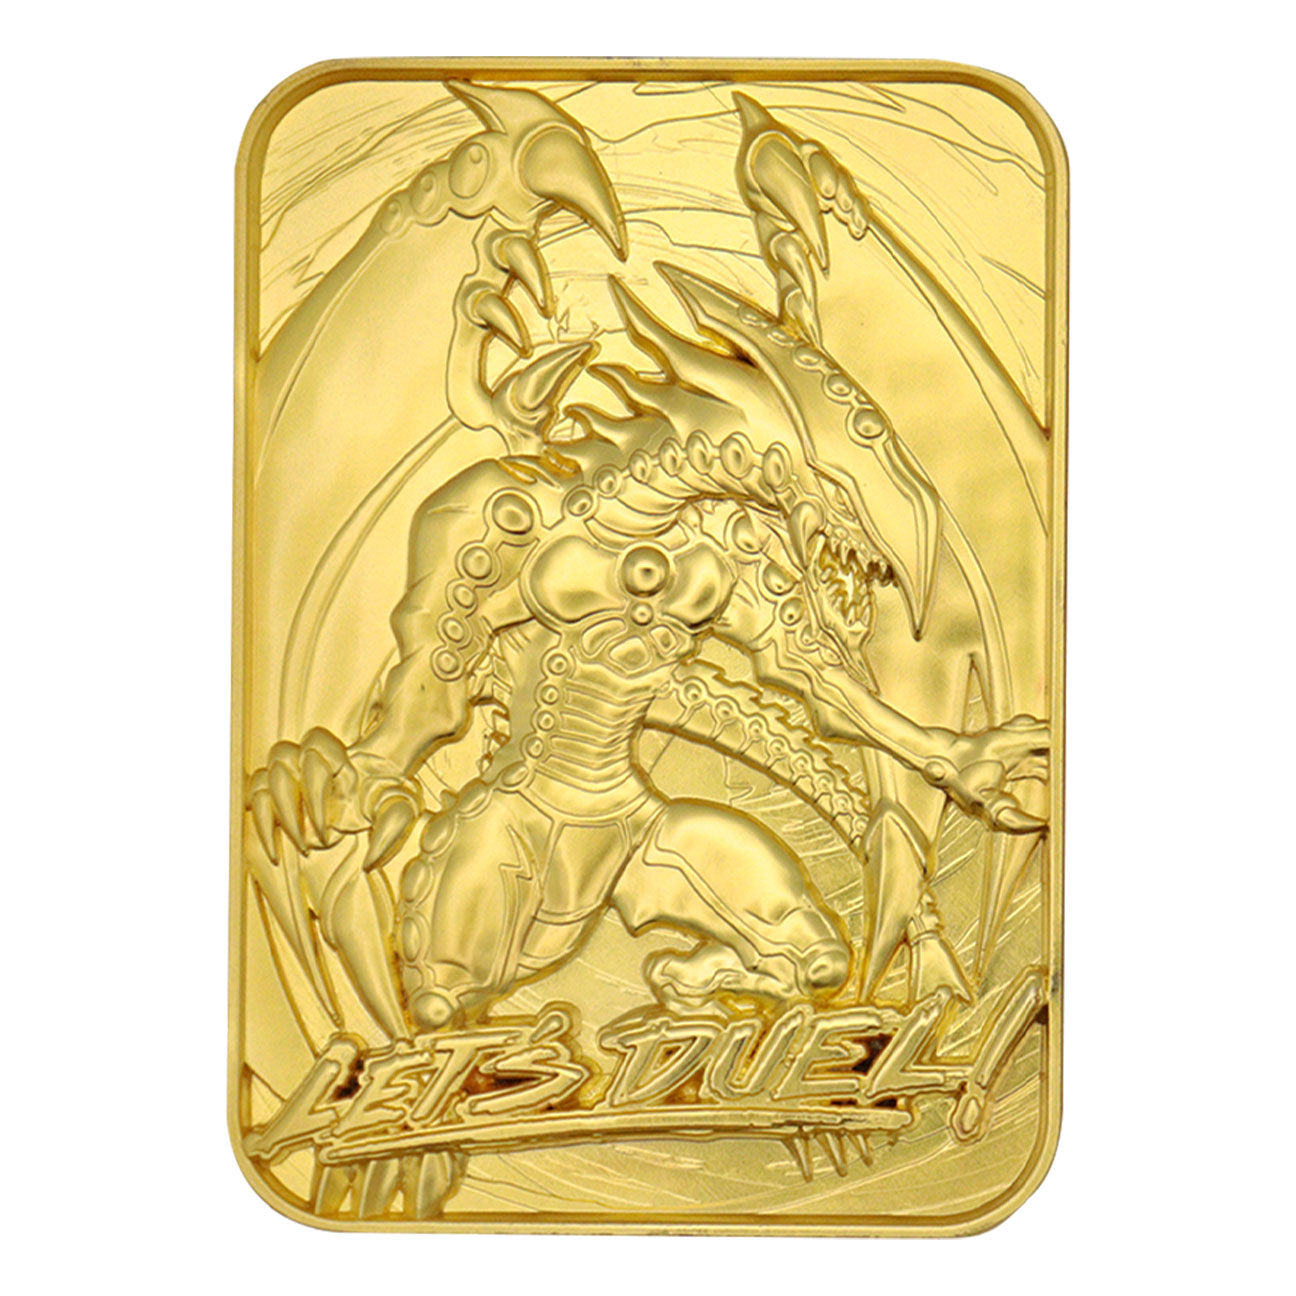 Yu-Gi-Oh! Limited Edition 24k Gold Plated Gandora the Dragon of Destruction Metal Card